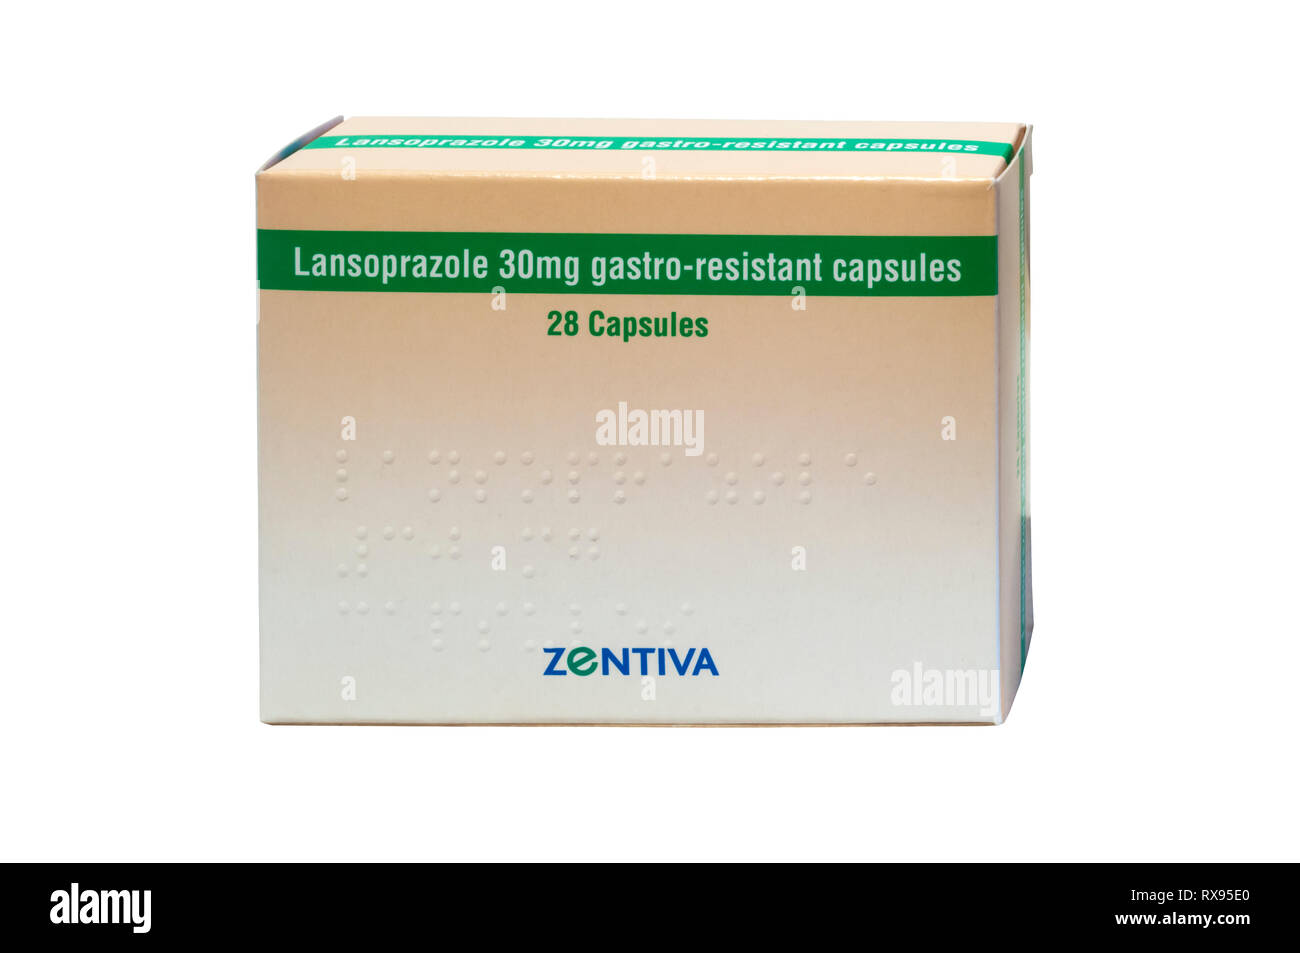 A packet of Zentiva Lansoprazole capsules. Stock Photo